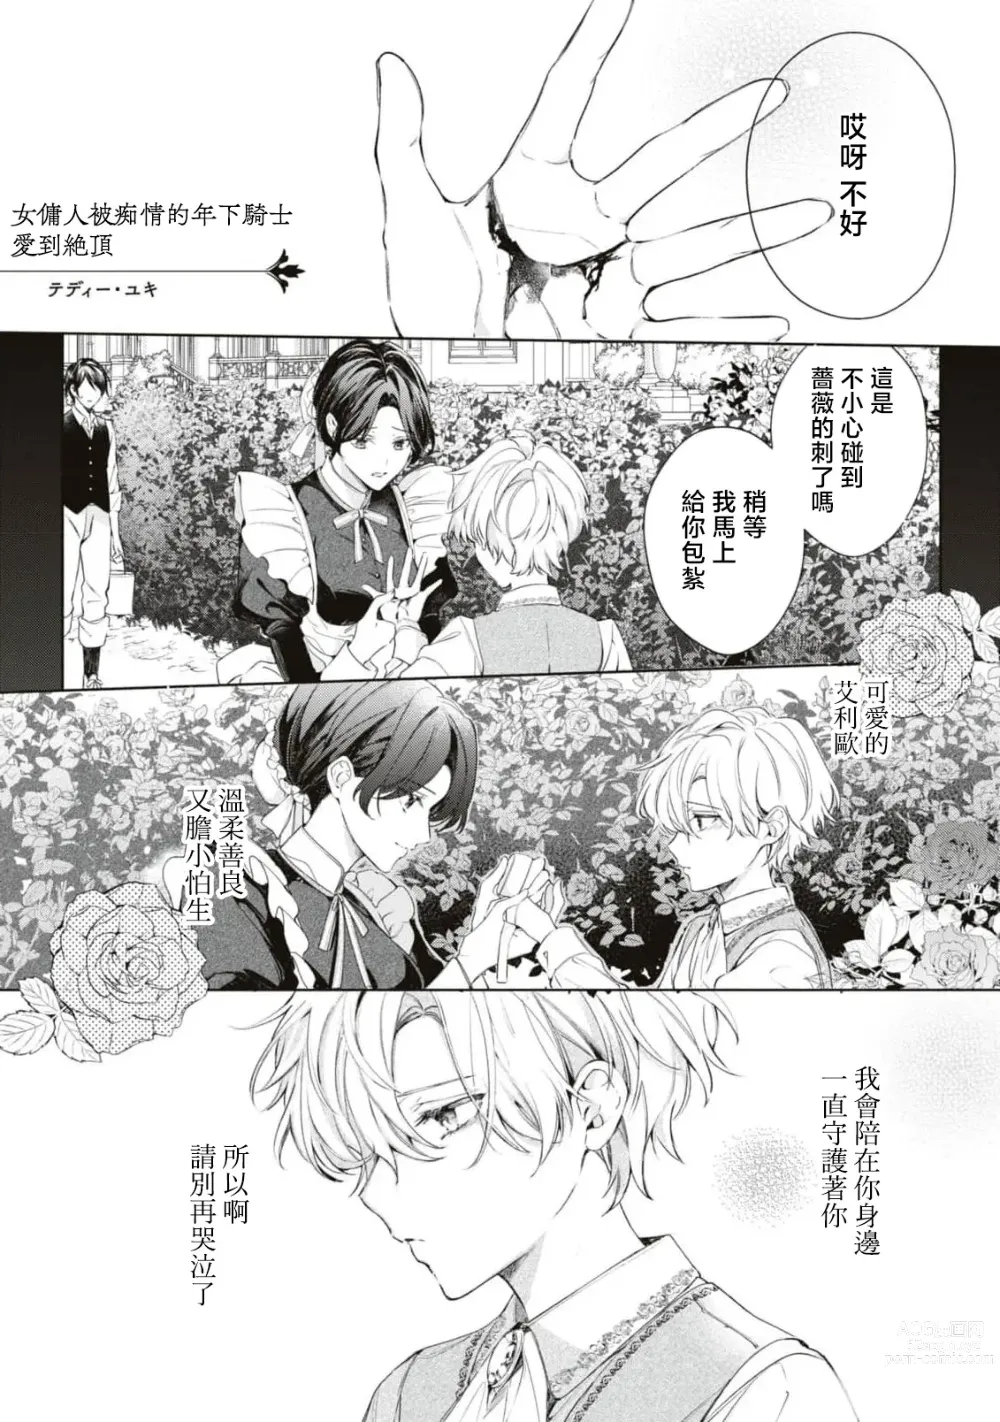 Page 3 of manga 女佣人被痴情的年下骑士爱到绝顶